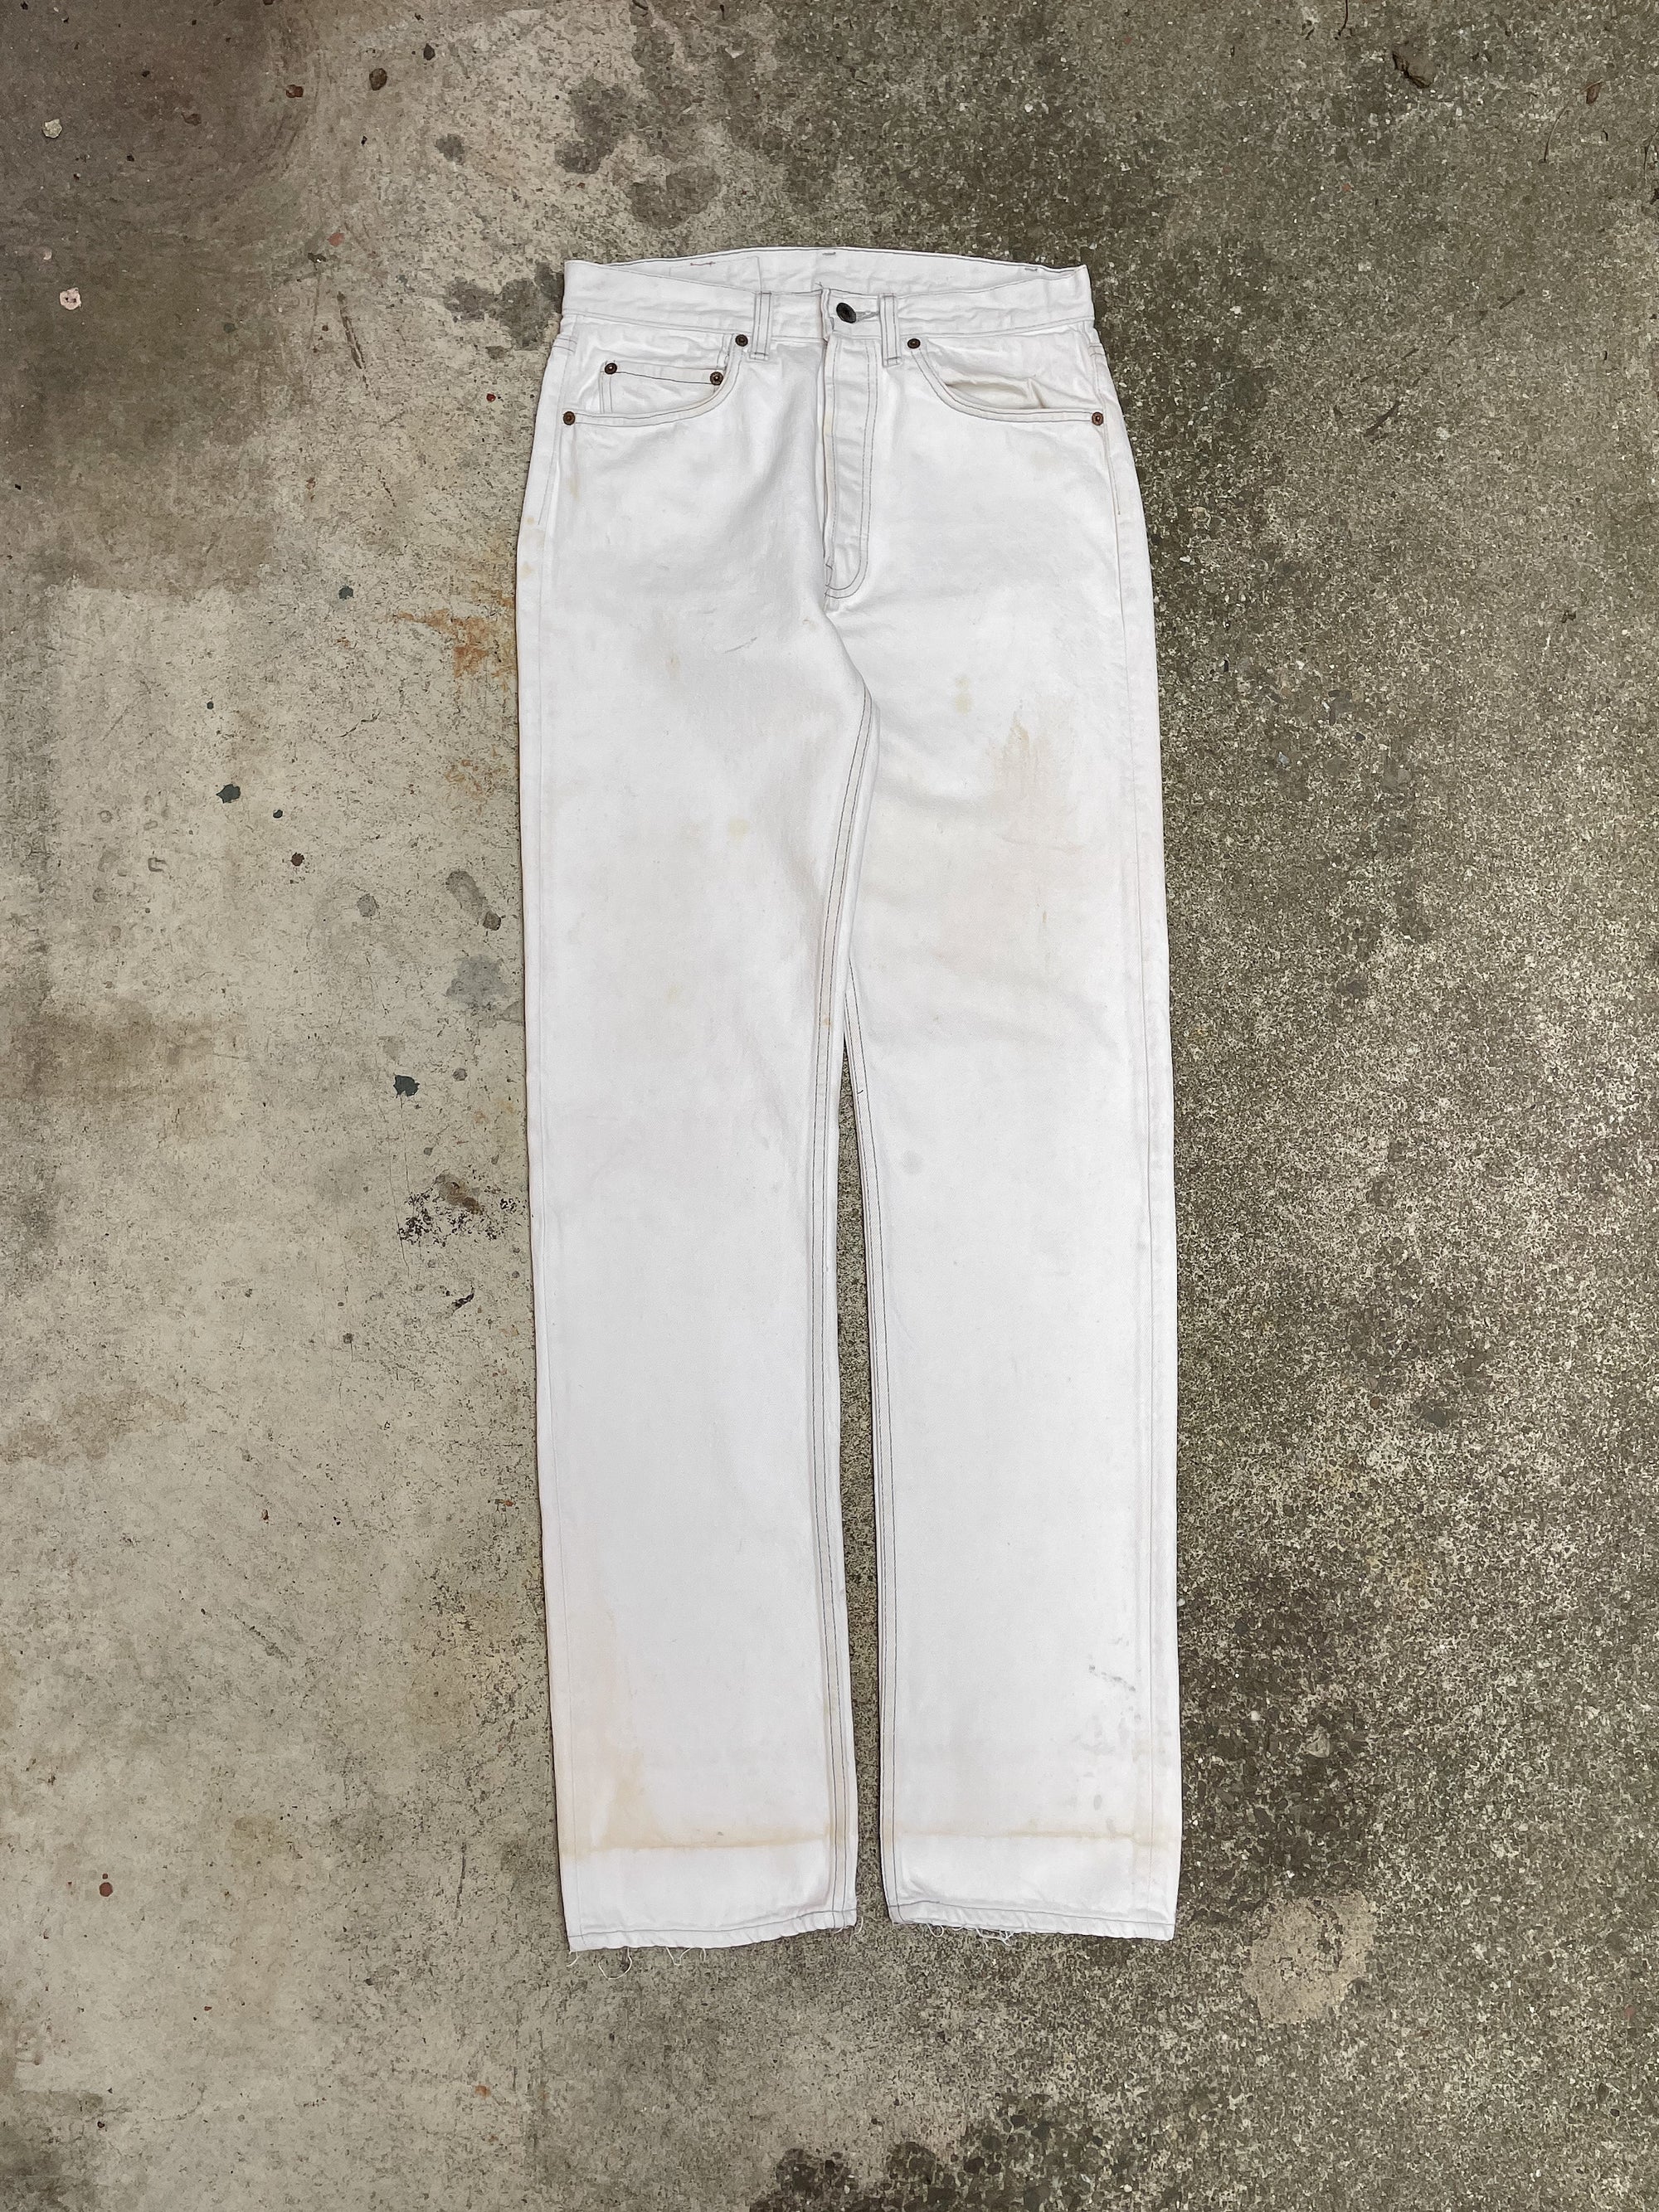 1980s Levi’s Dirty White 501 (29X35)